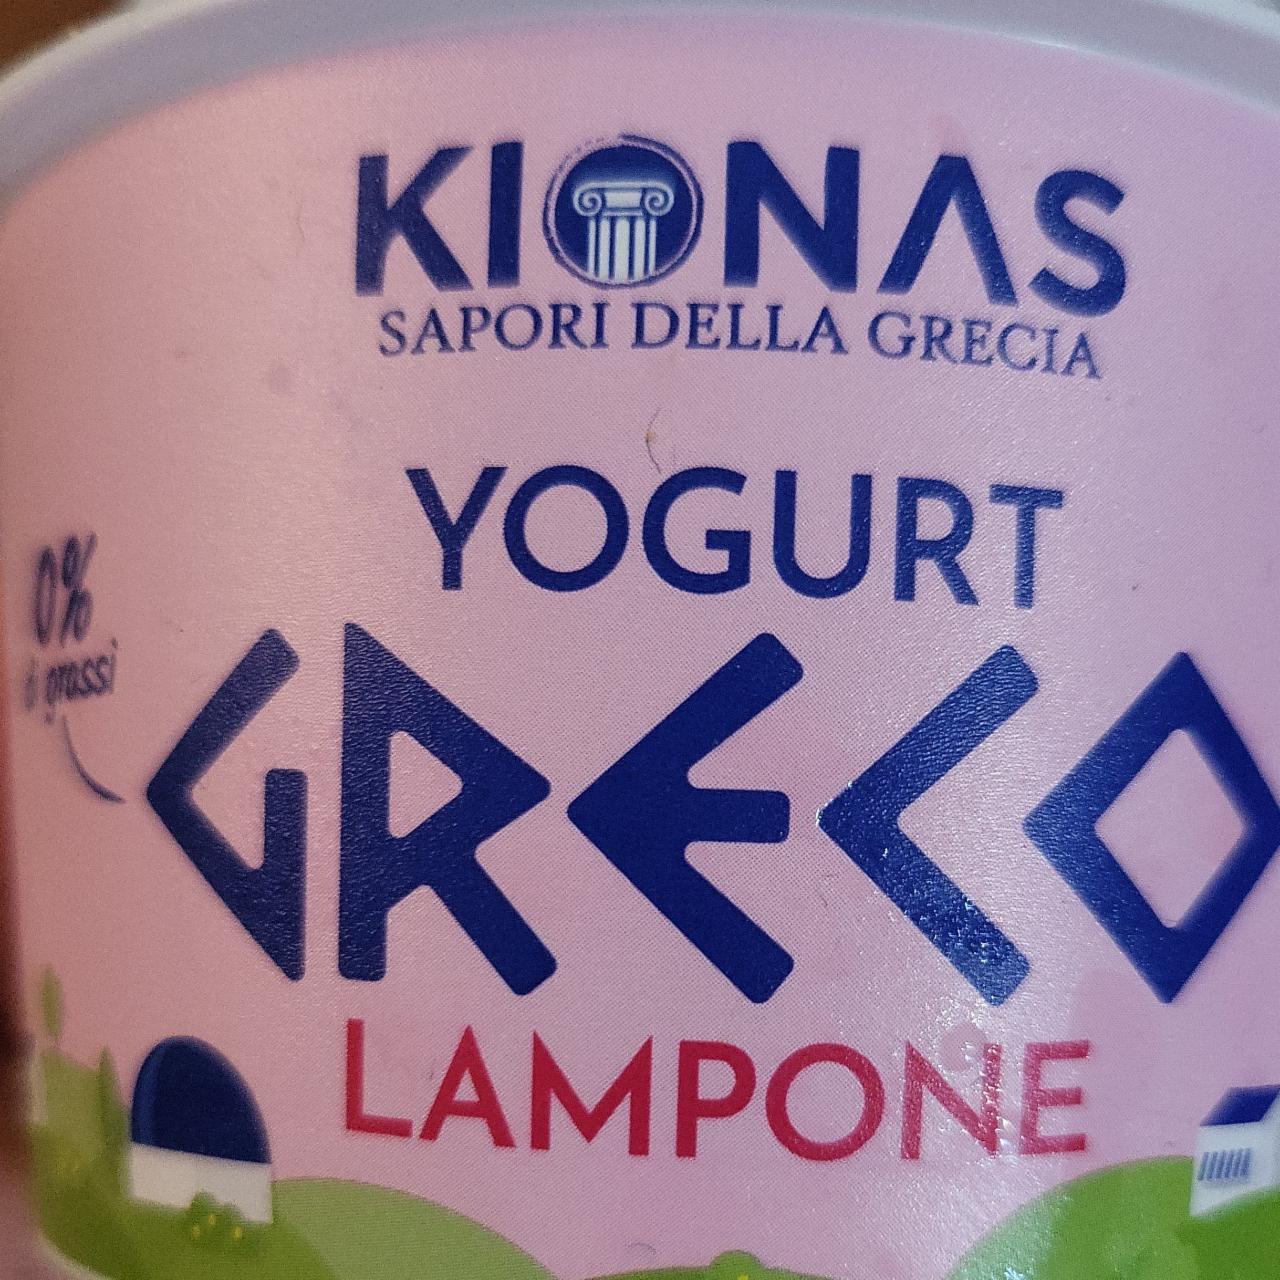 Fotografie - Yogurt greco lampone Kionas